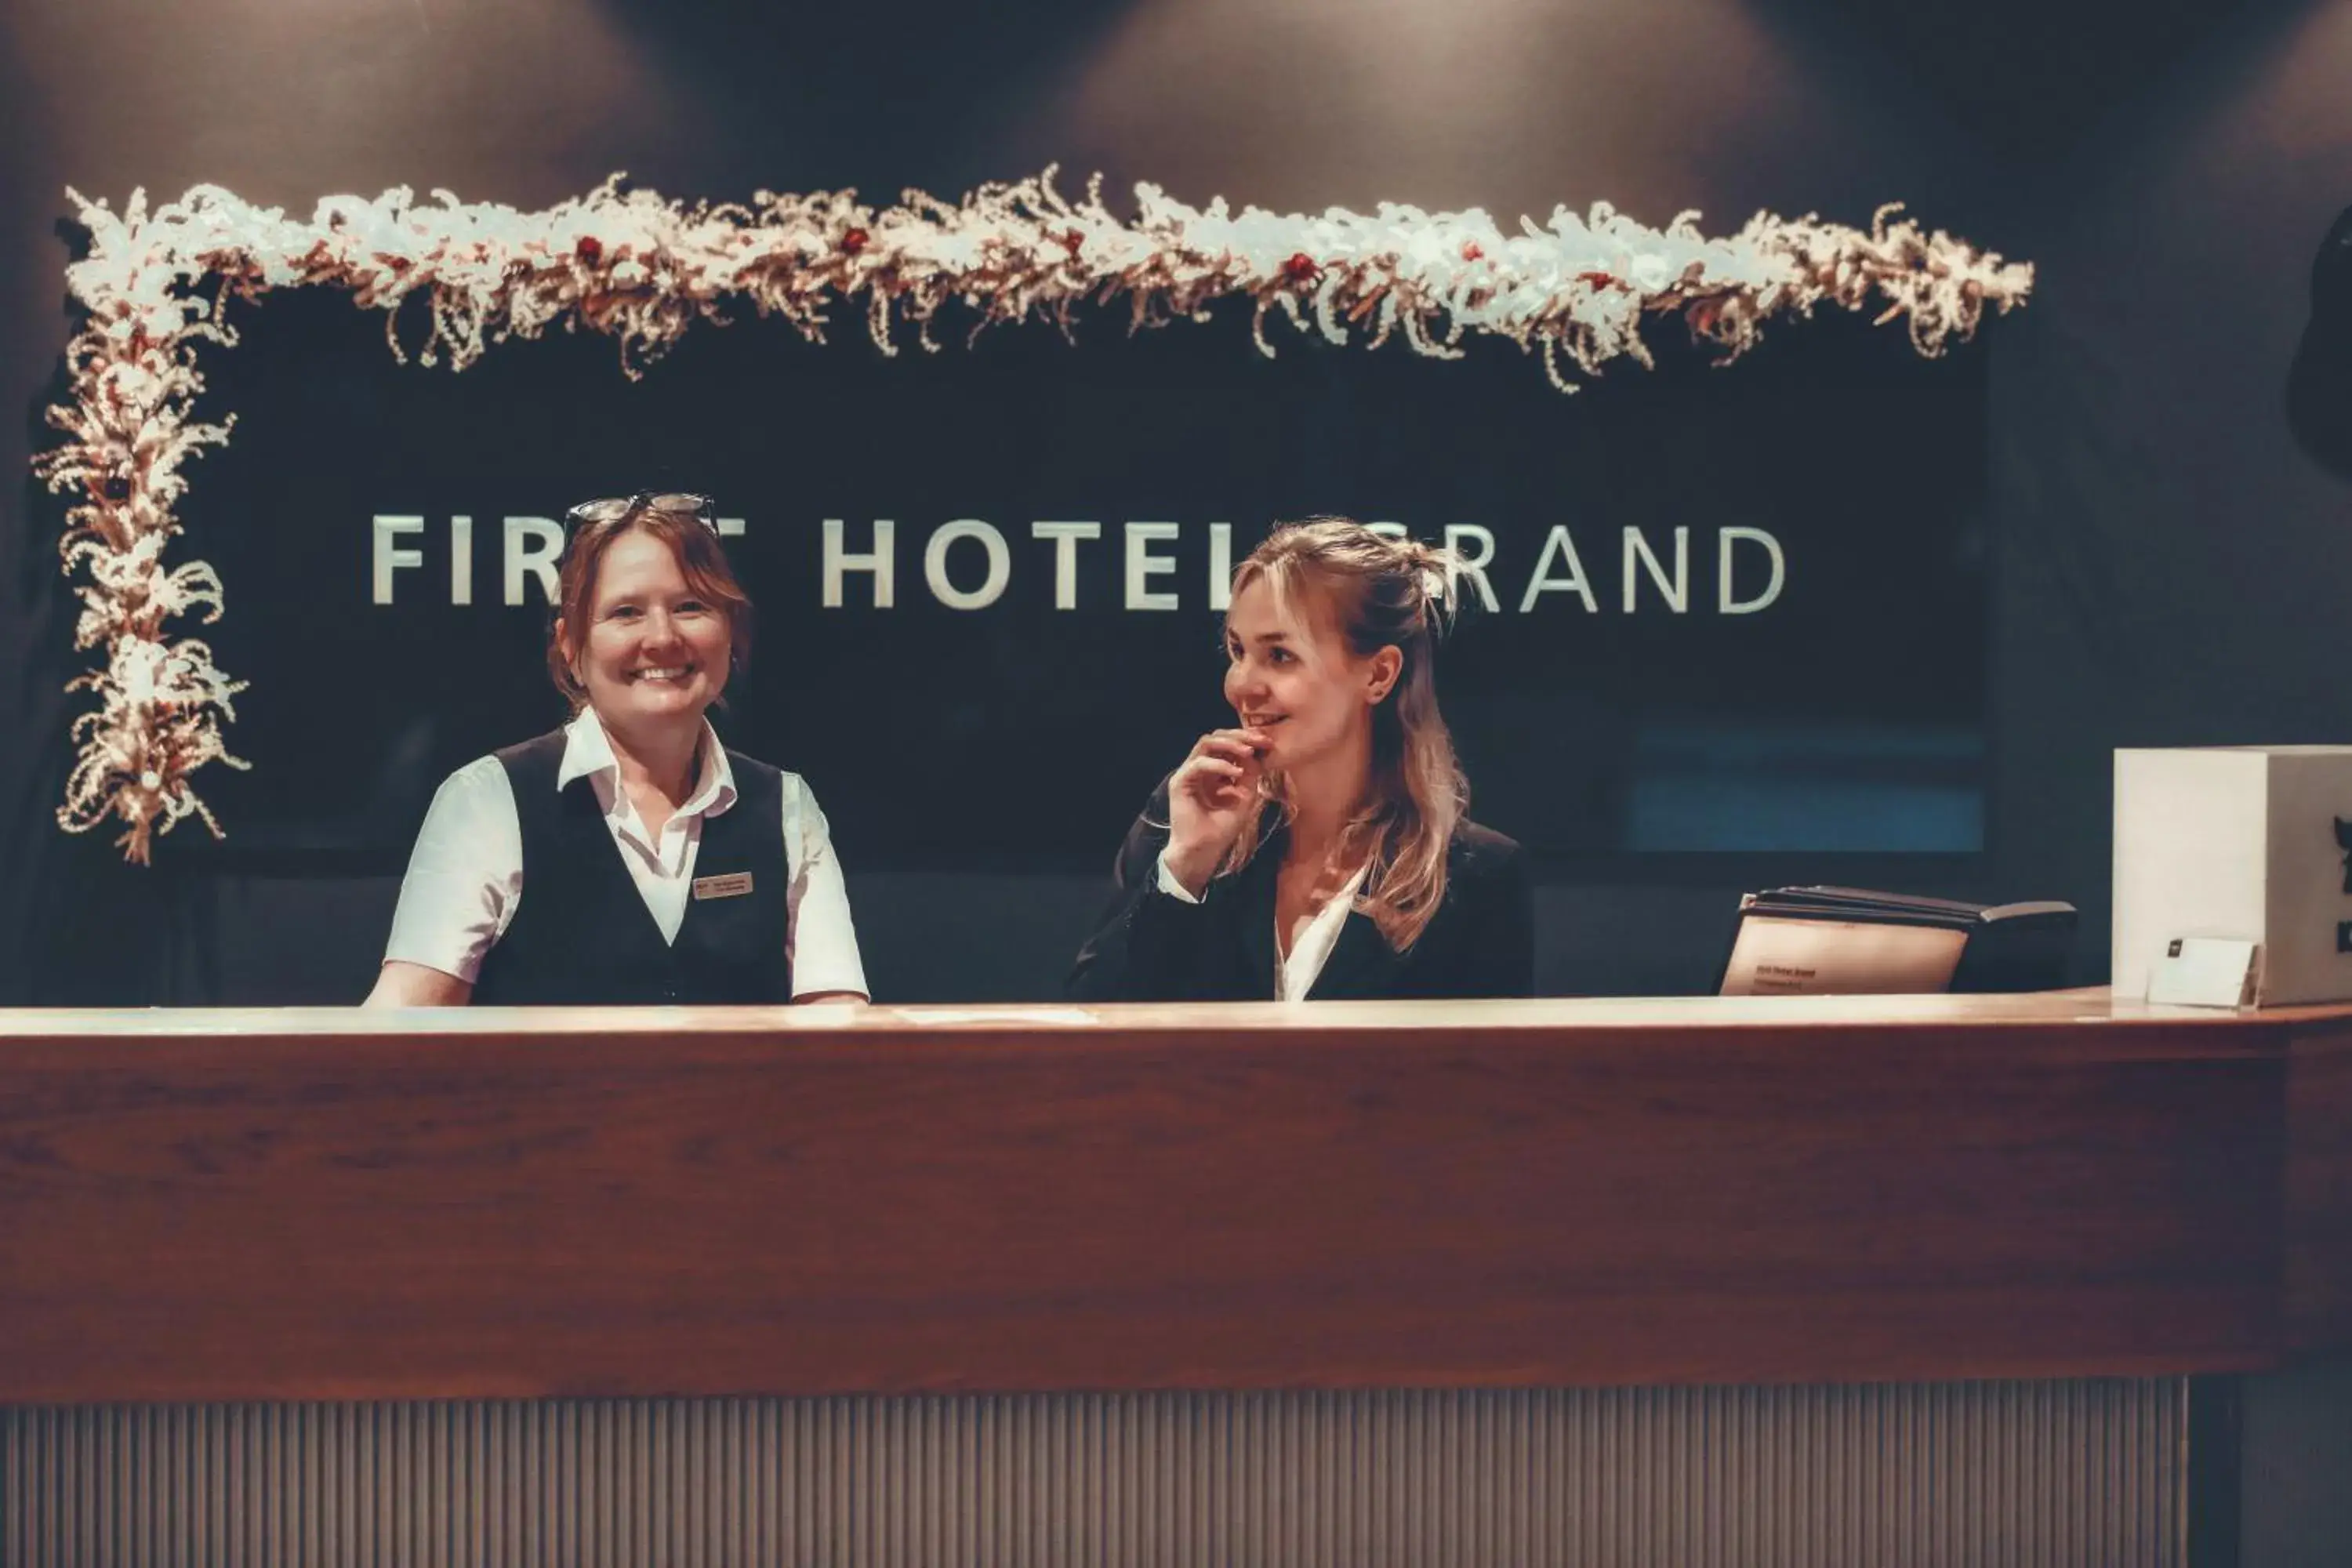 Staff in First Hotel Grand Falun